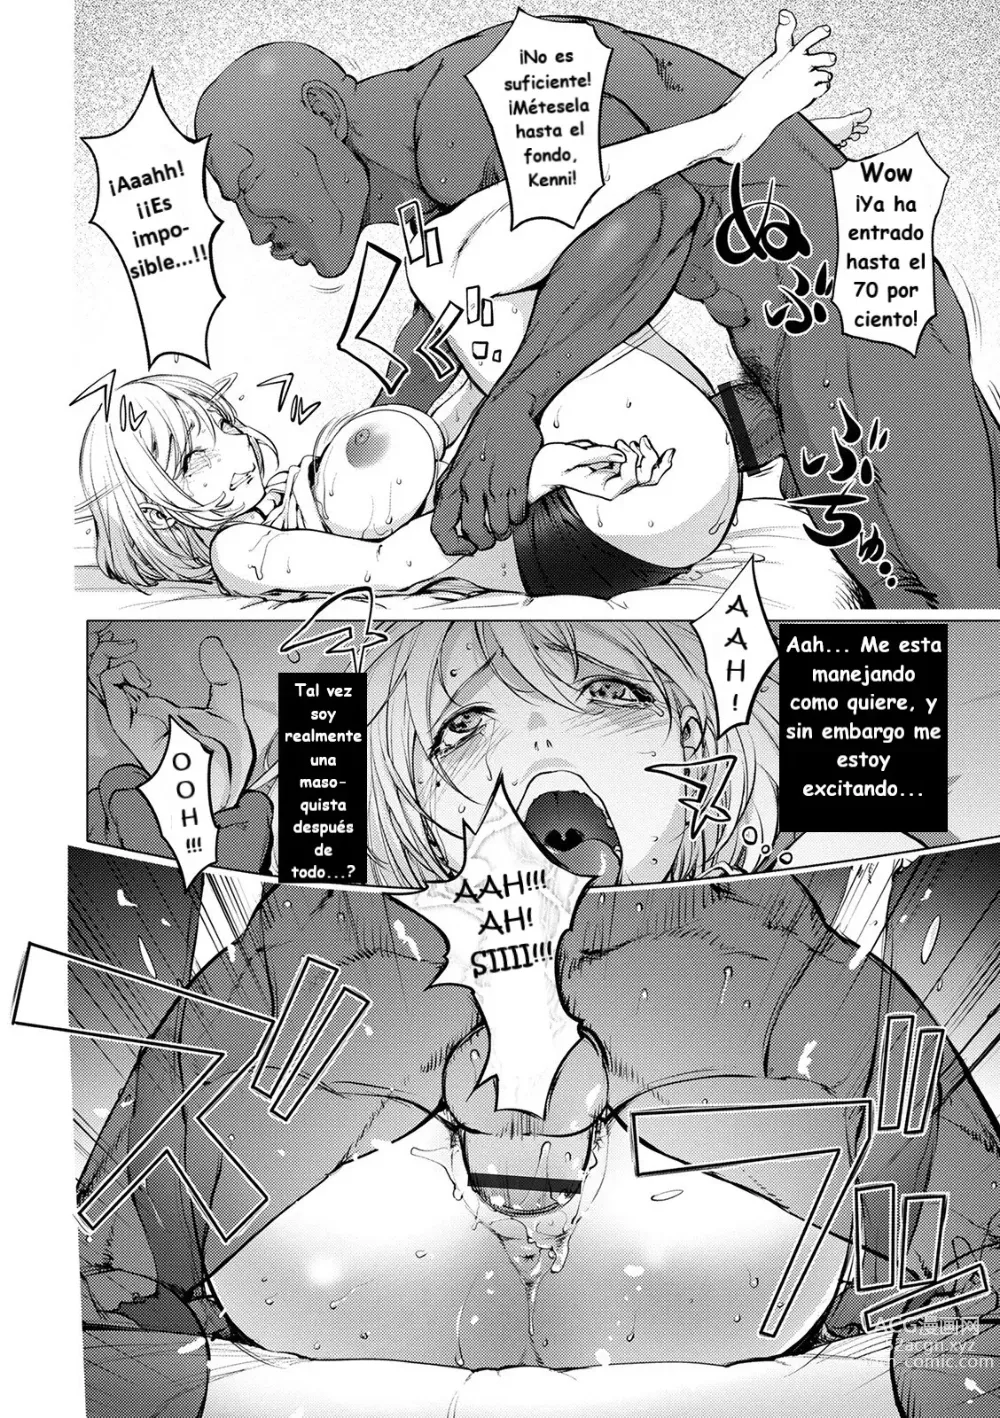 Page 15 of doujinshi Kayano Neeko AV 1 y 2 sin censura.